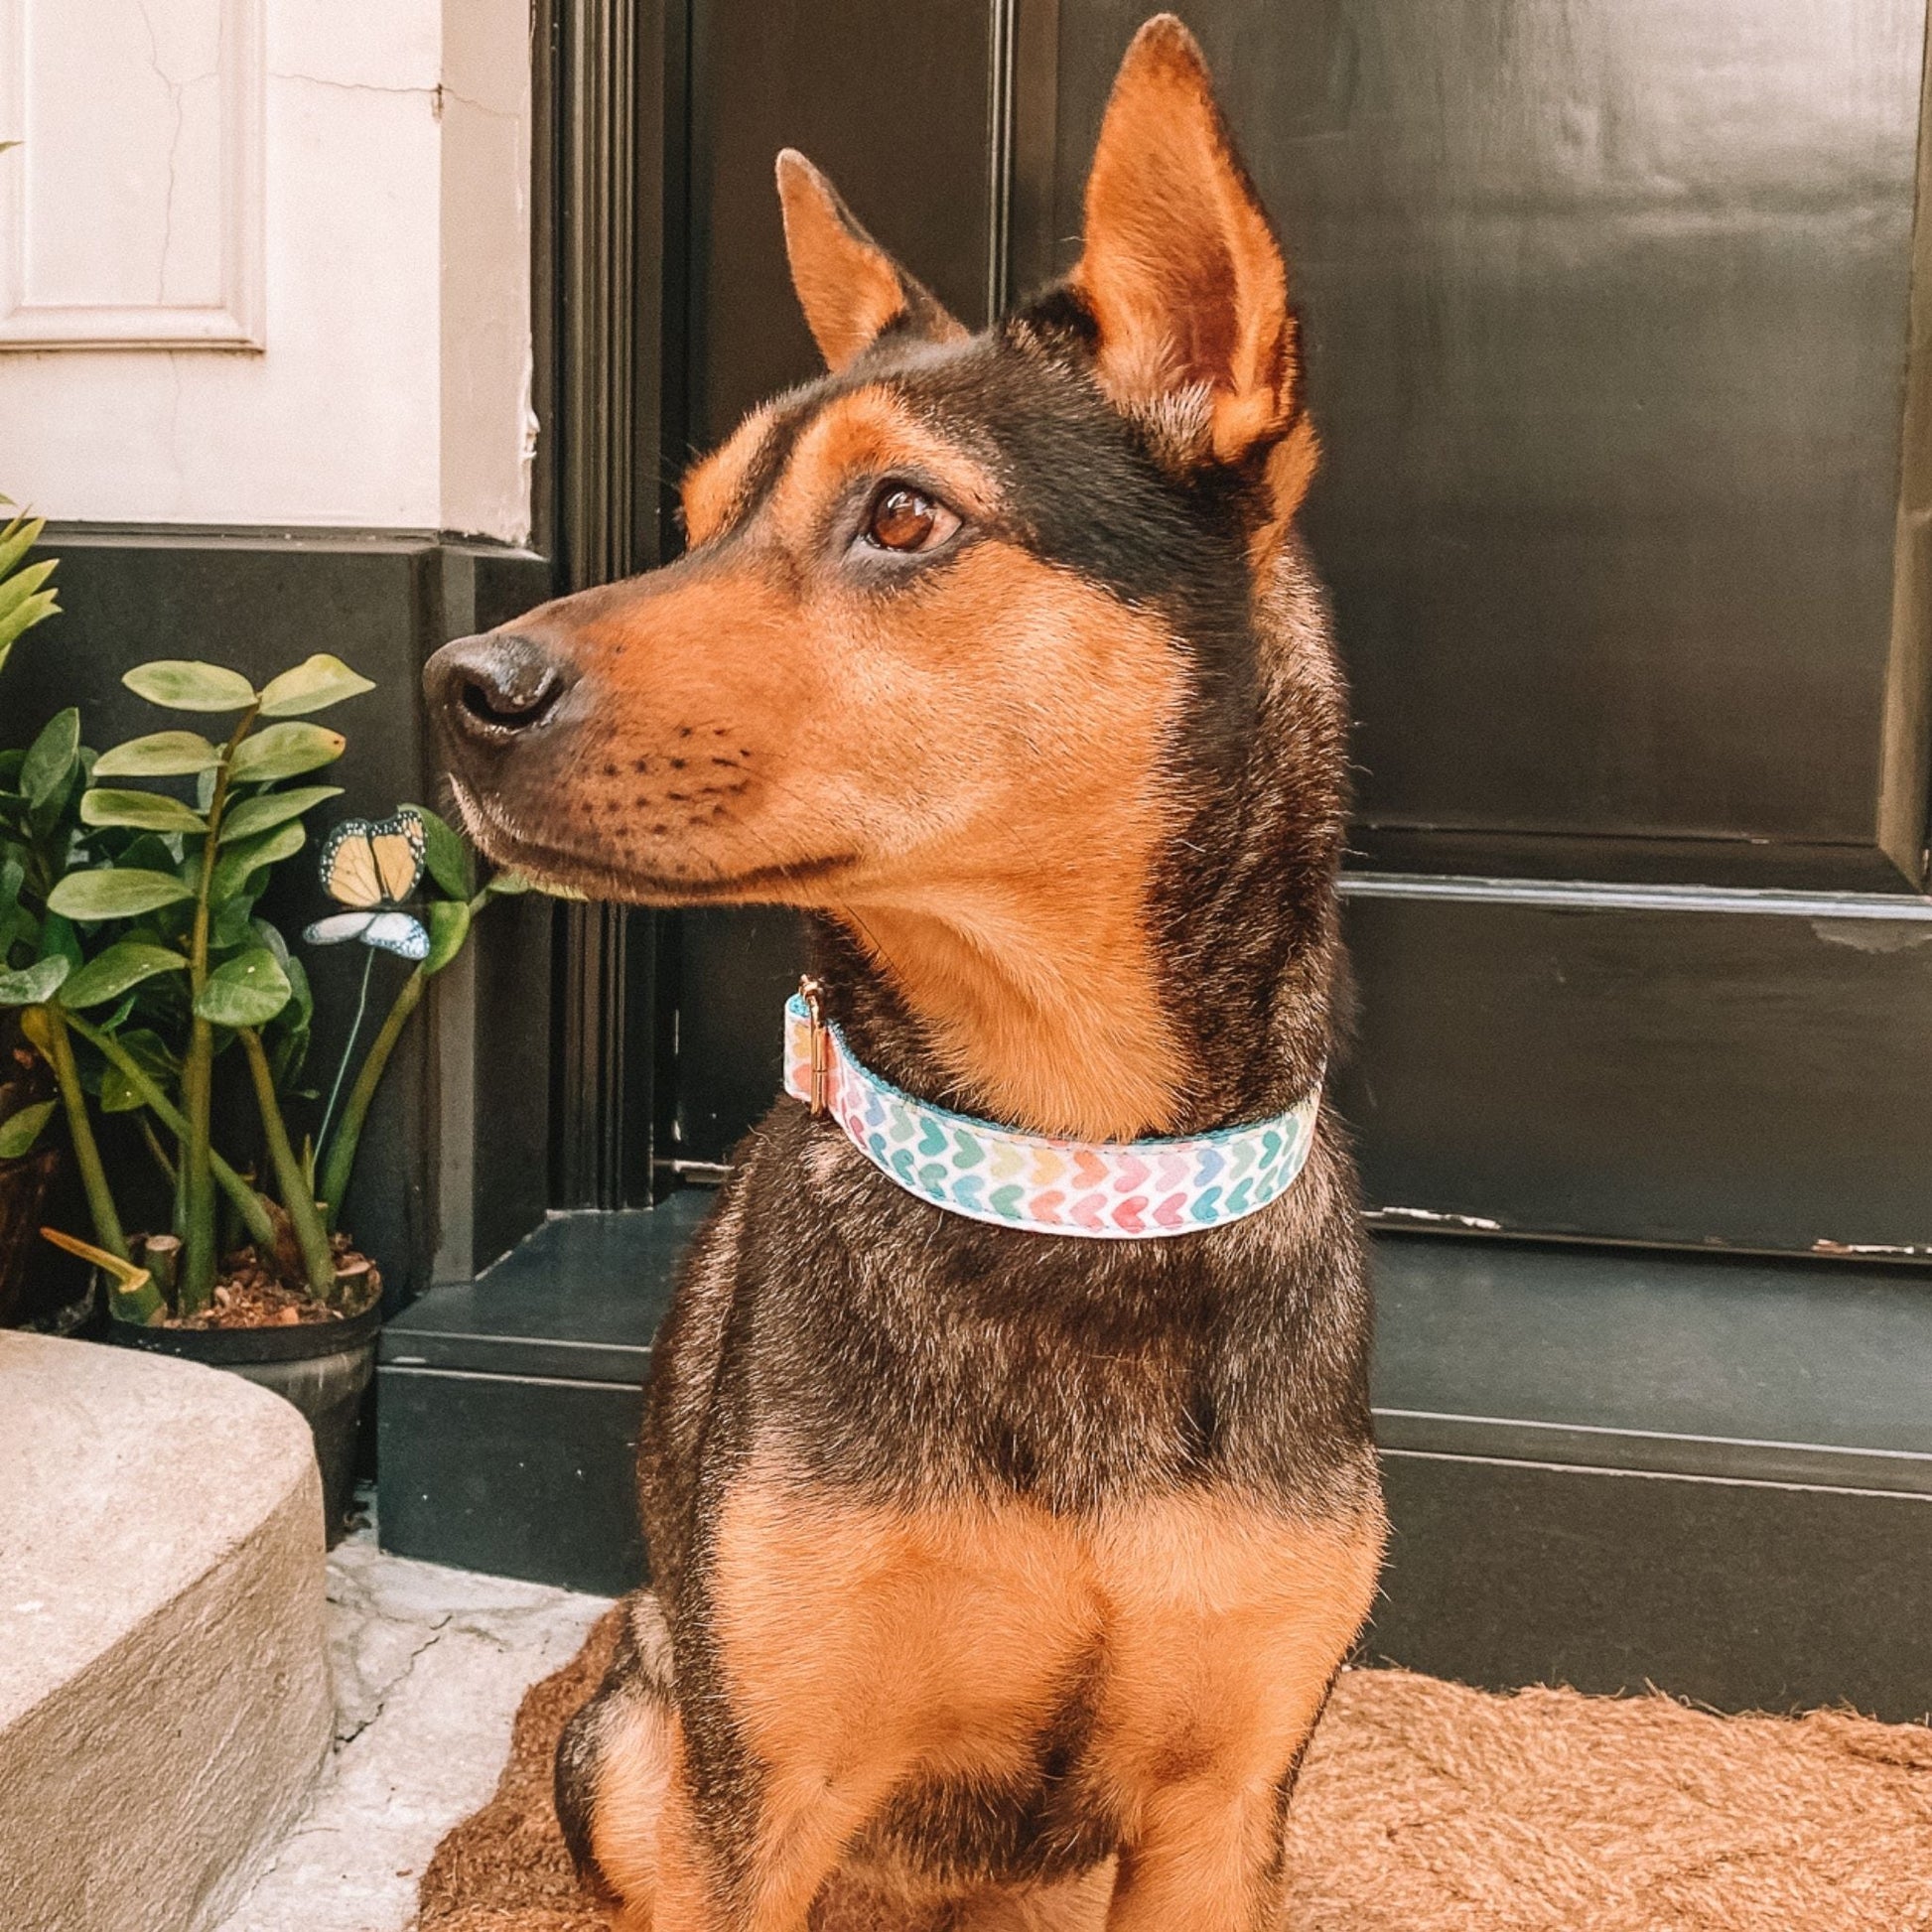 Rainbow Hearts Engraved Dog Collar - Sam and Dot